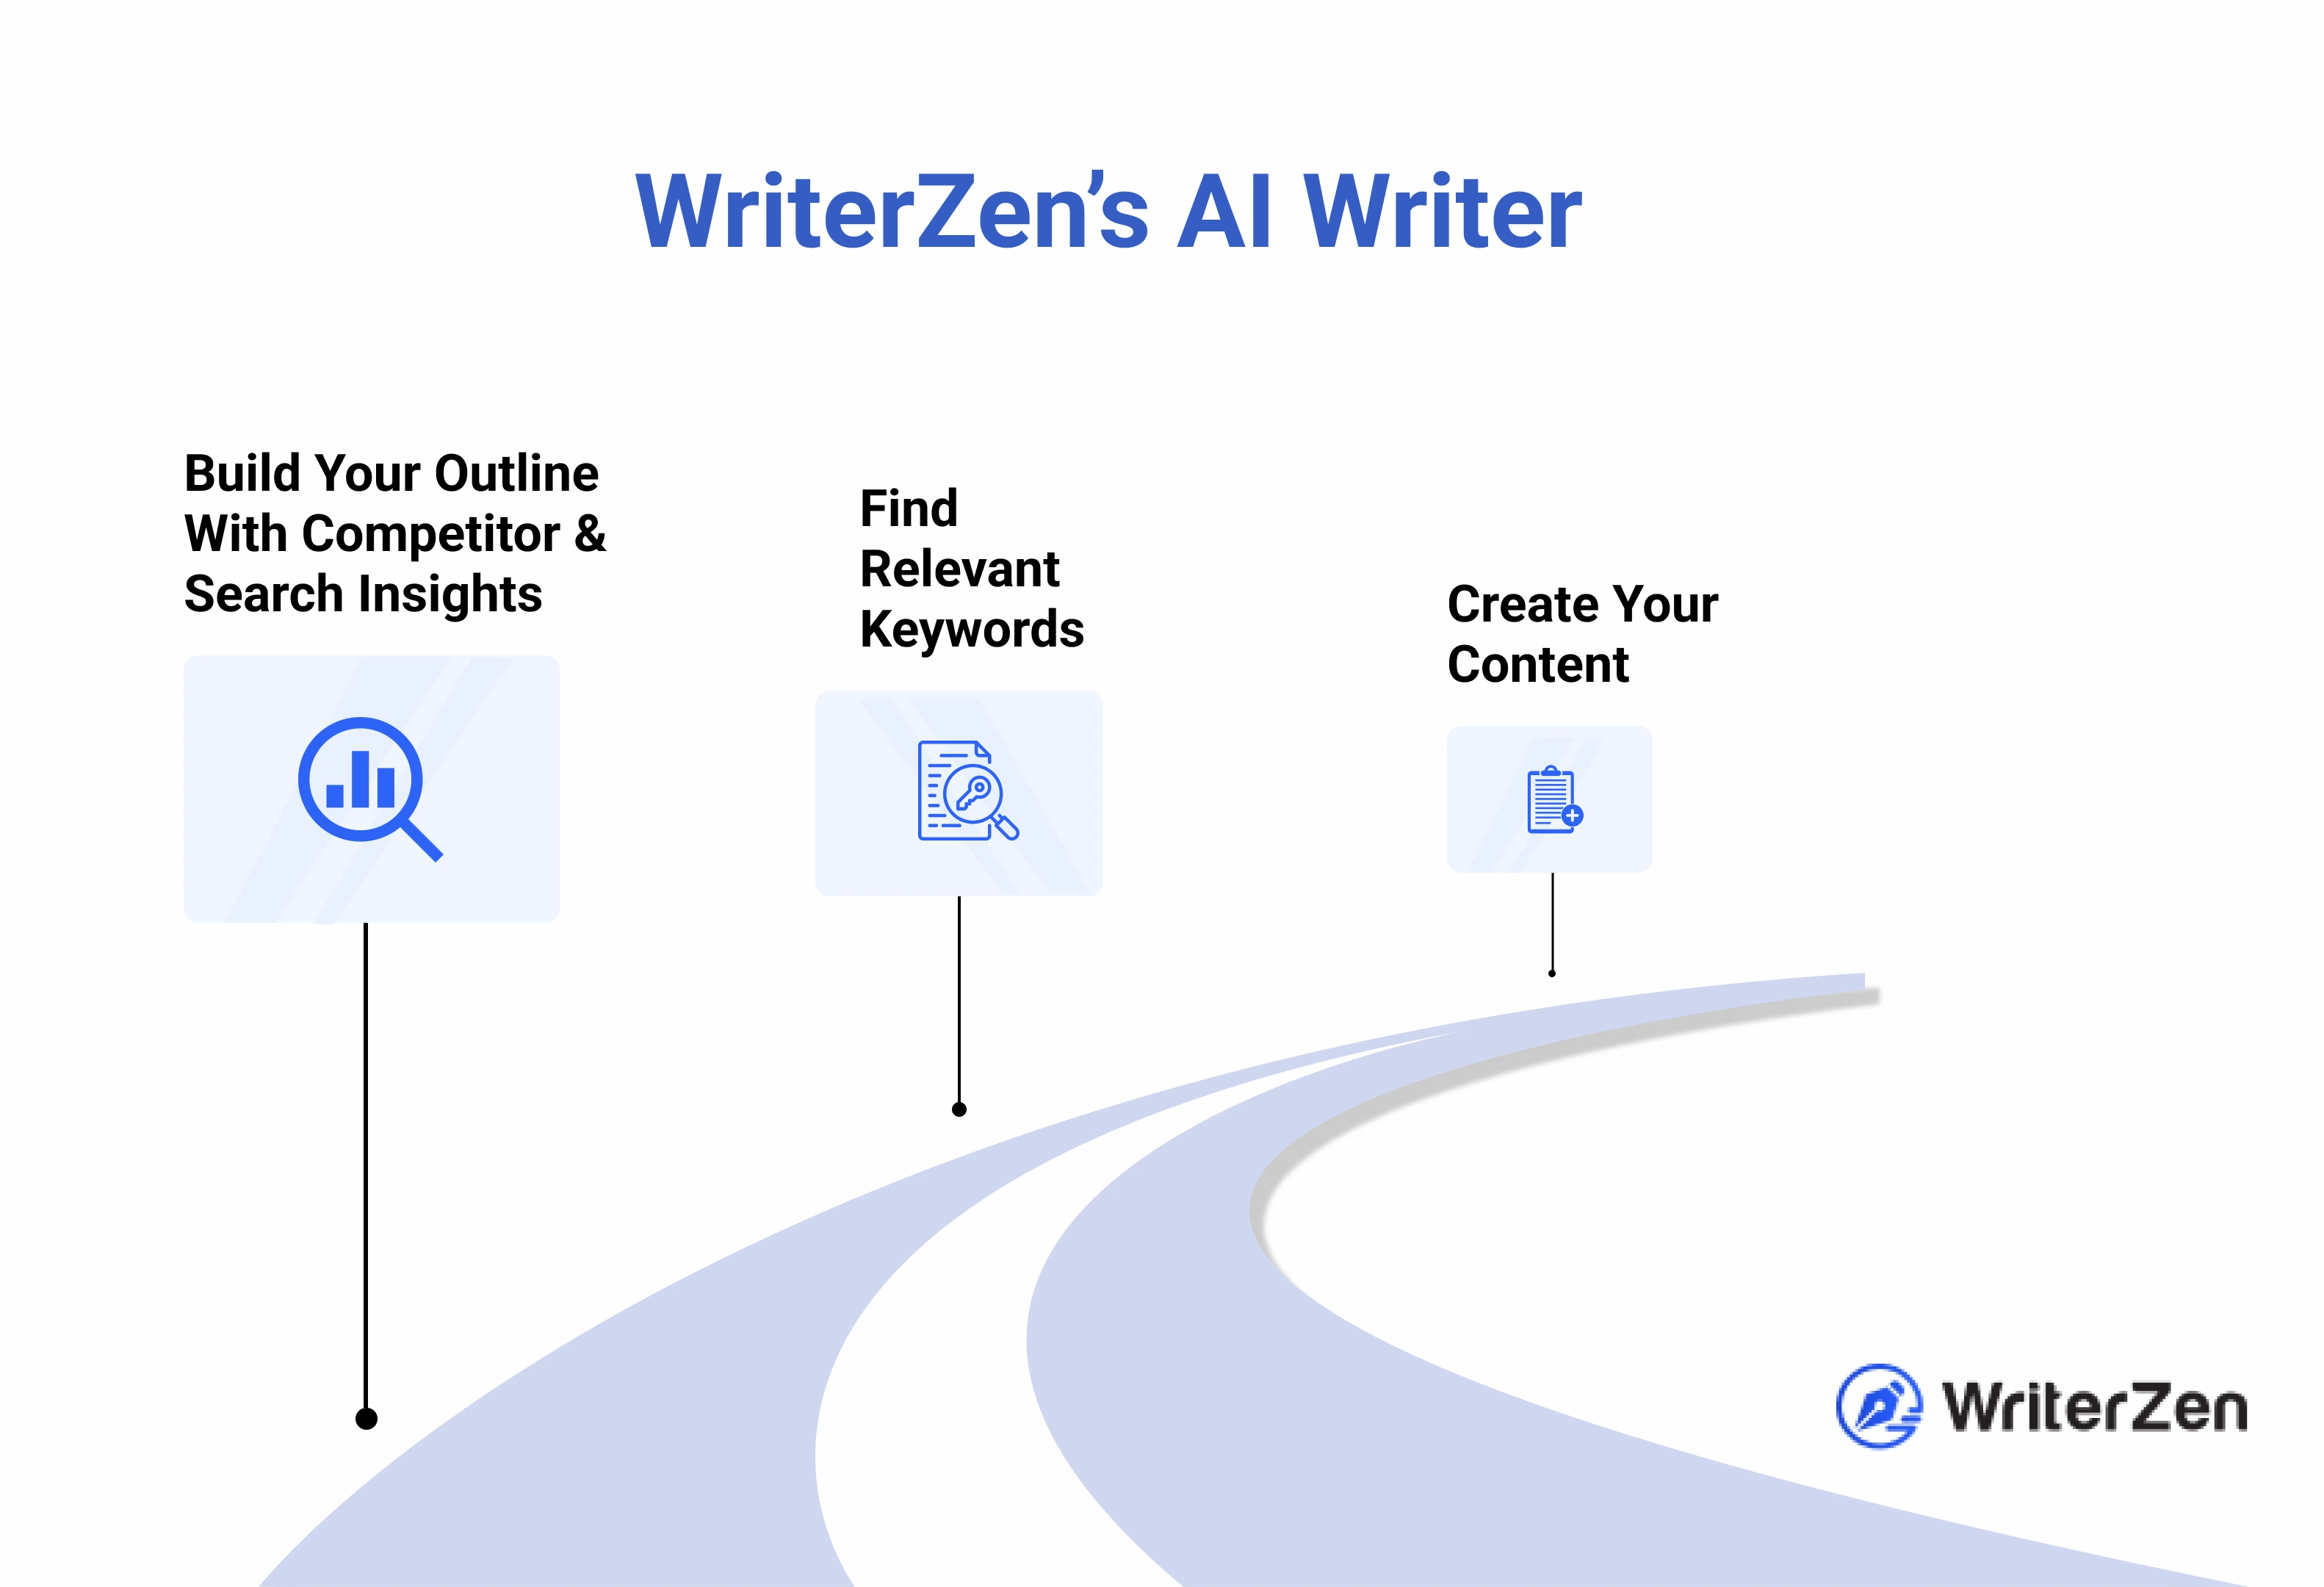 WriterZen AI Writer's key features